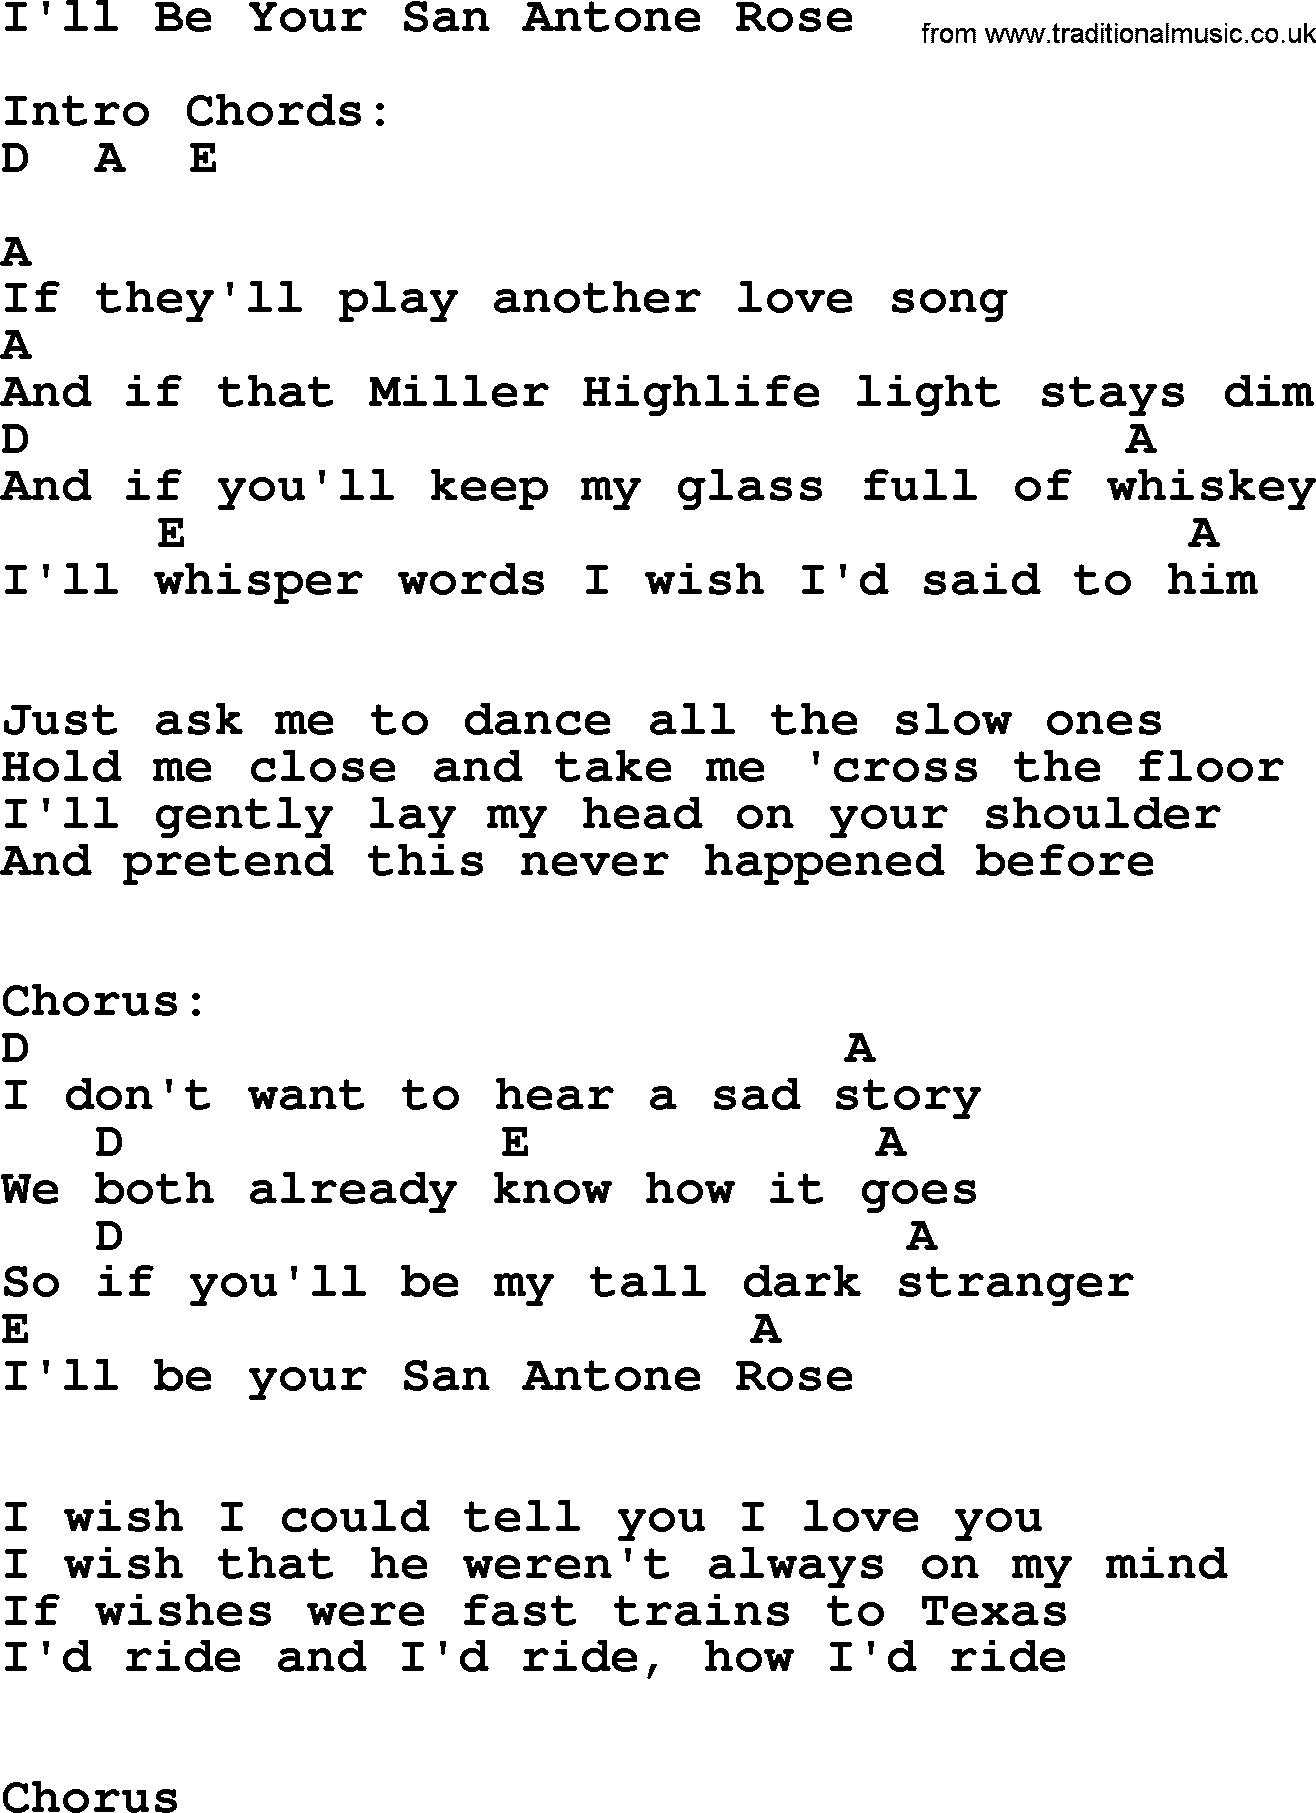 Emmylou Harris song: I'll Be Your San Antone Rose lyrics and chords